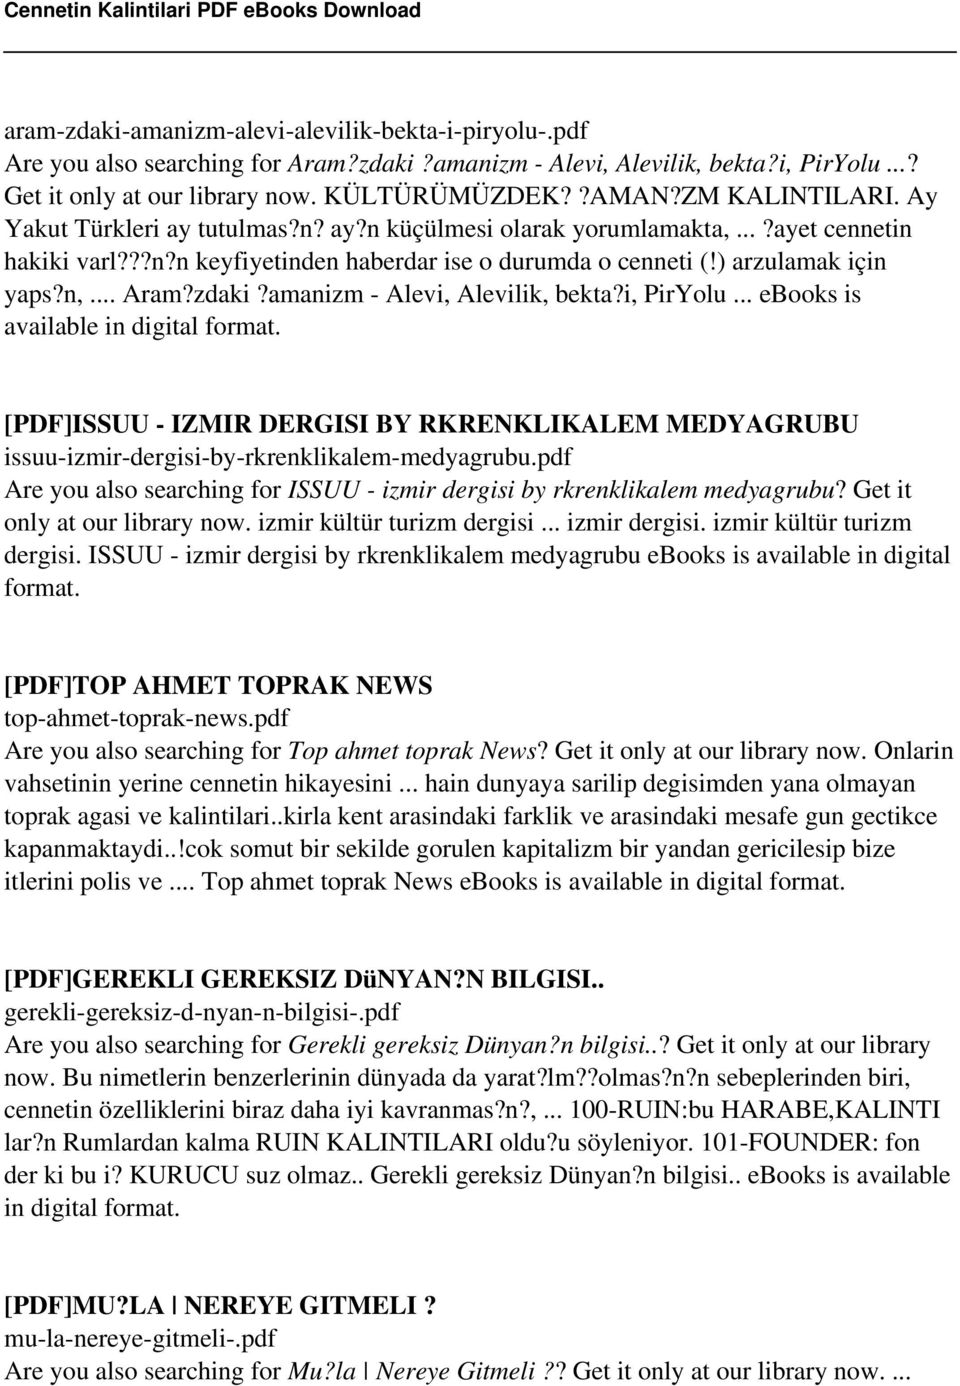 zdaki?amanizm - Alevi, Alevilik, bekta?i, PirYolu... ebooks is available in digital format. [PDF]ISSUU - IZMIR DERGISI BY RKRENKLIKALEM MEDYAGRUBU issuu-izmir-dergisi-by-rkrenklikalem-medyagrubu.